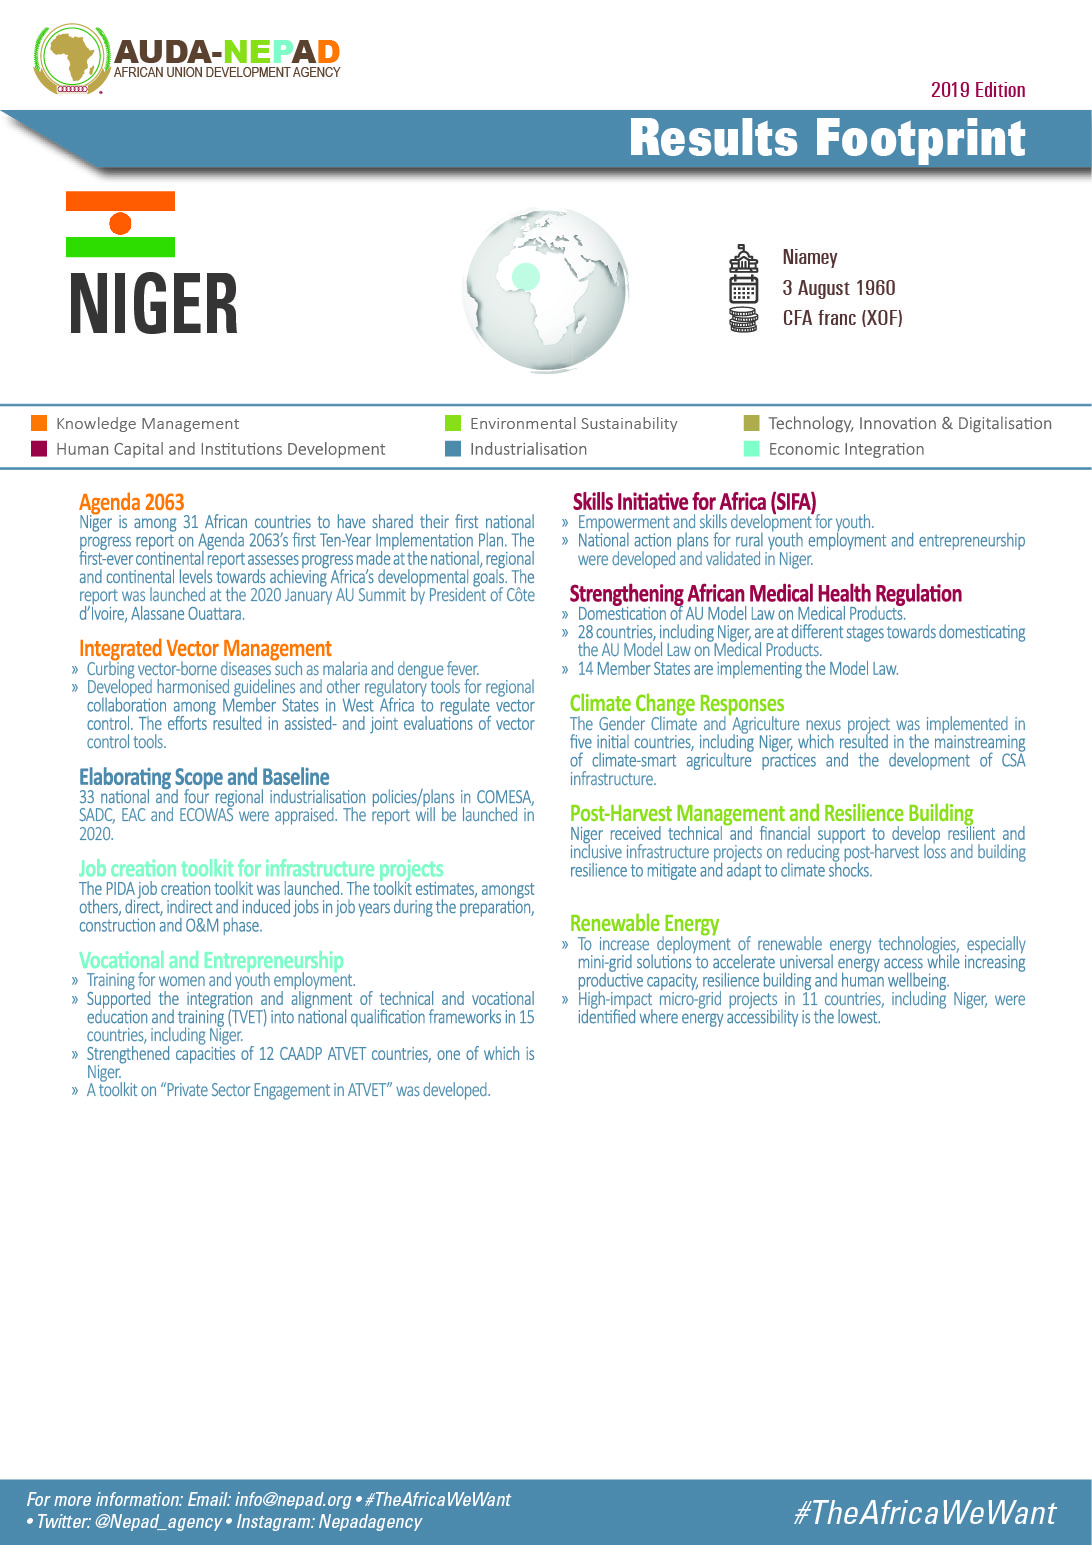 2019 AUDA-NEPAD Footprint: Country Profiles: Niger